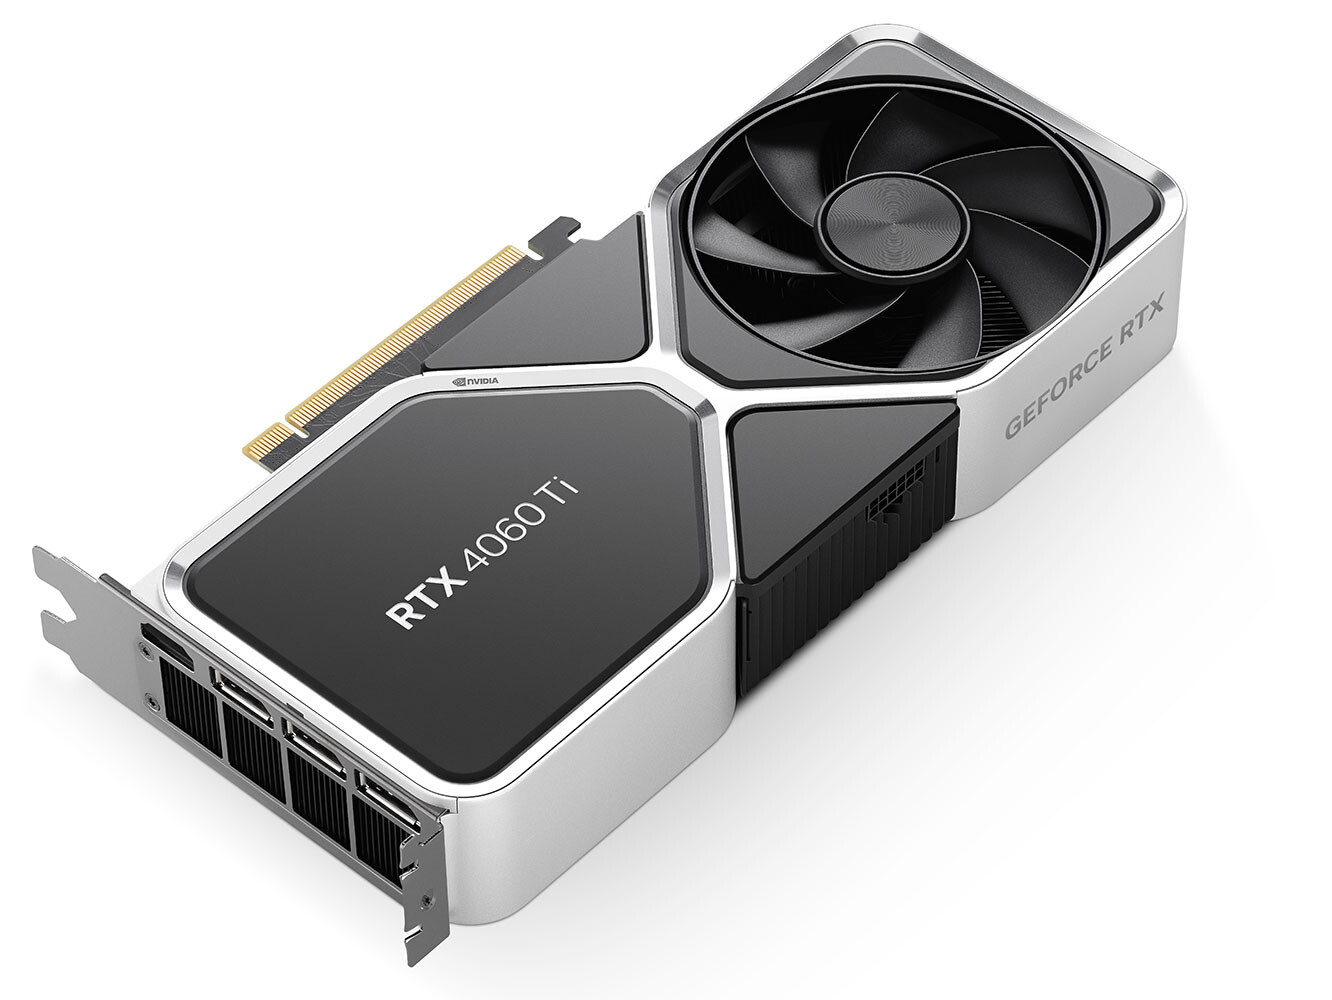 NVIDIA GeForce RTX 4060 Ti 16GB to feature AD106-351 GPU and 165W TDP 